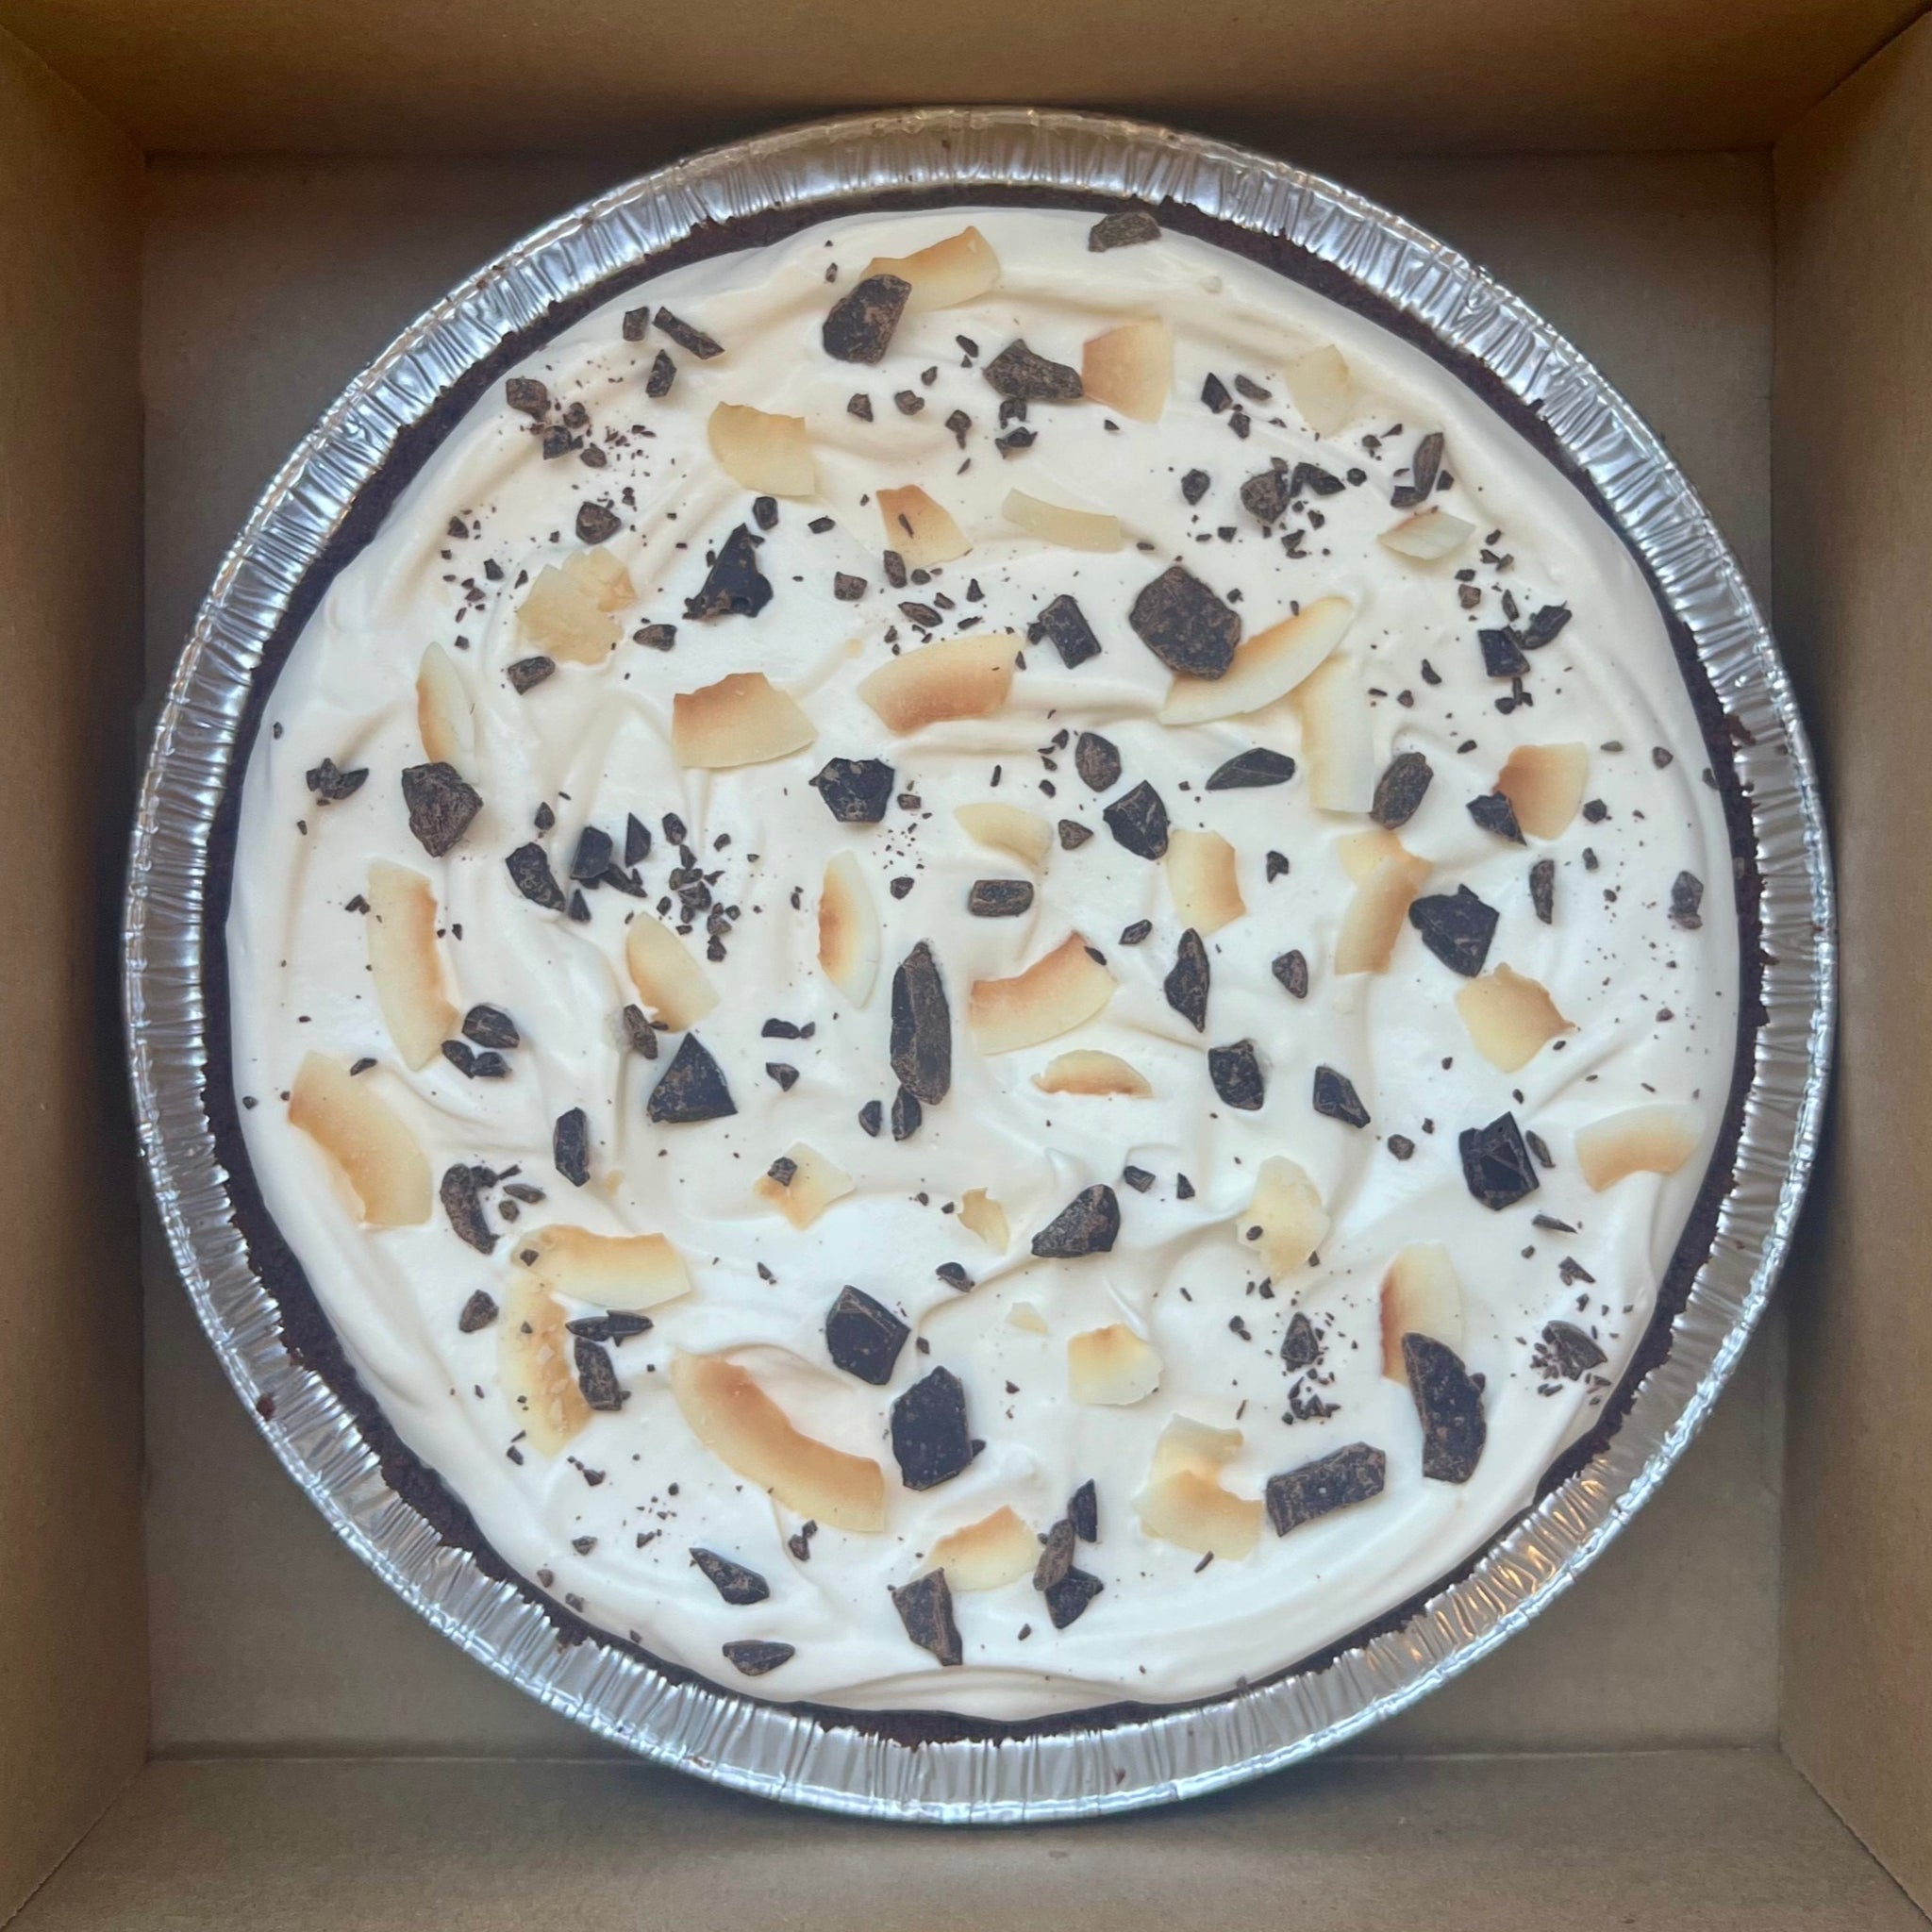 Samoa Pie - Available 3/26-4/8!